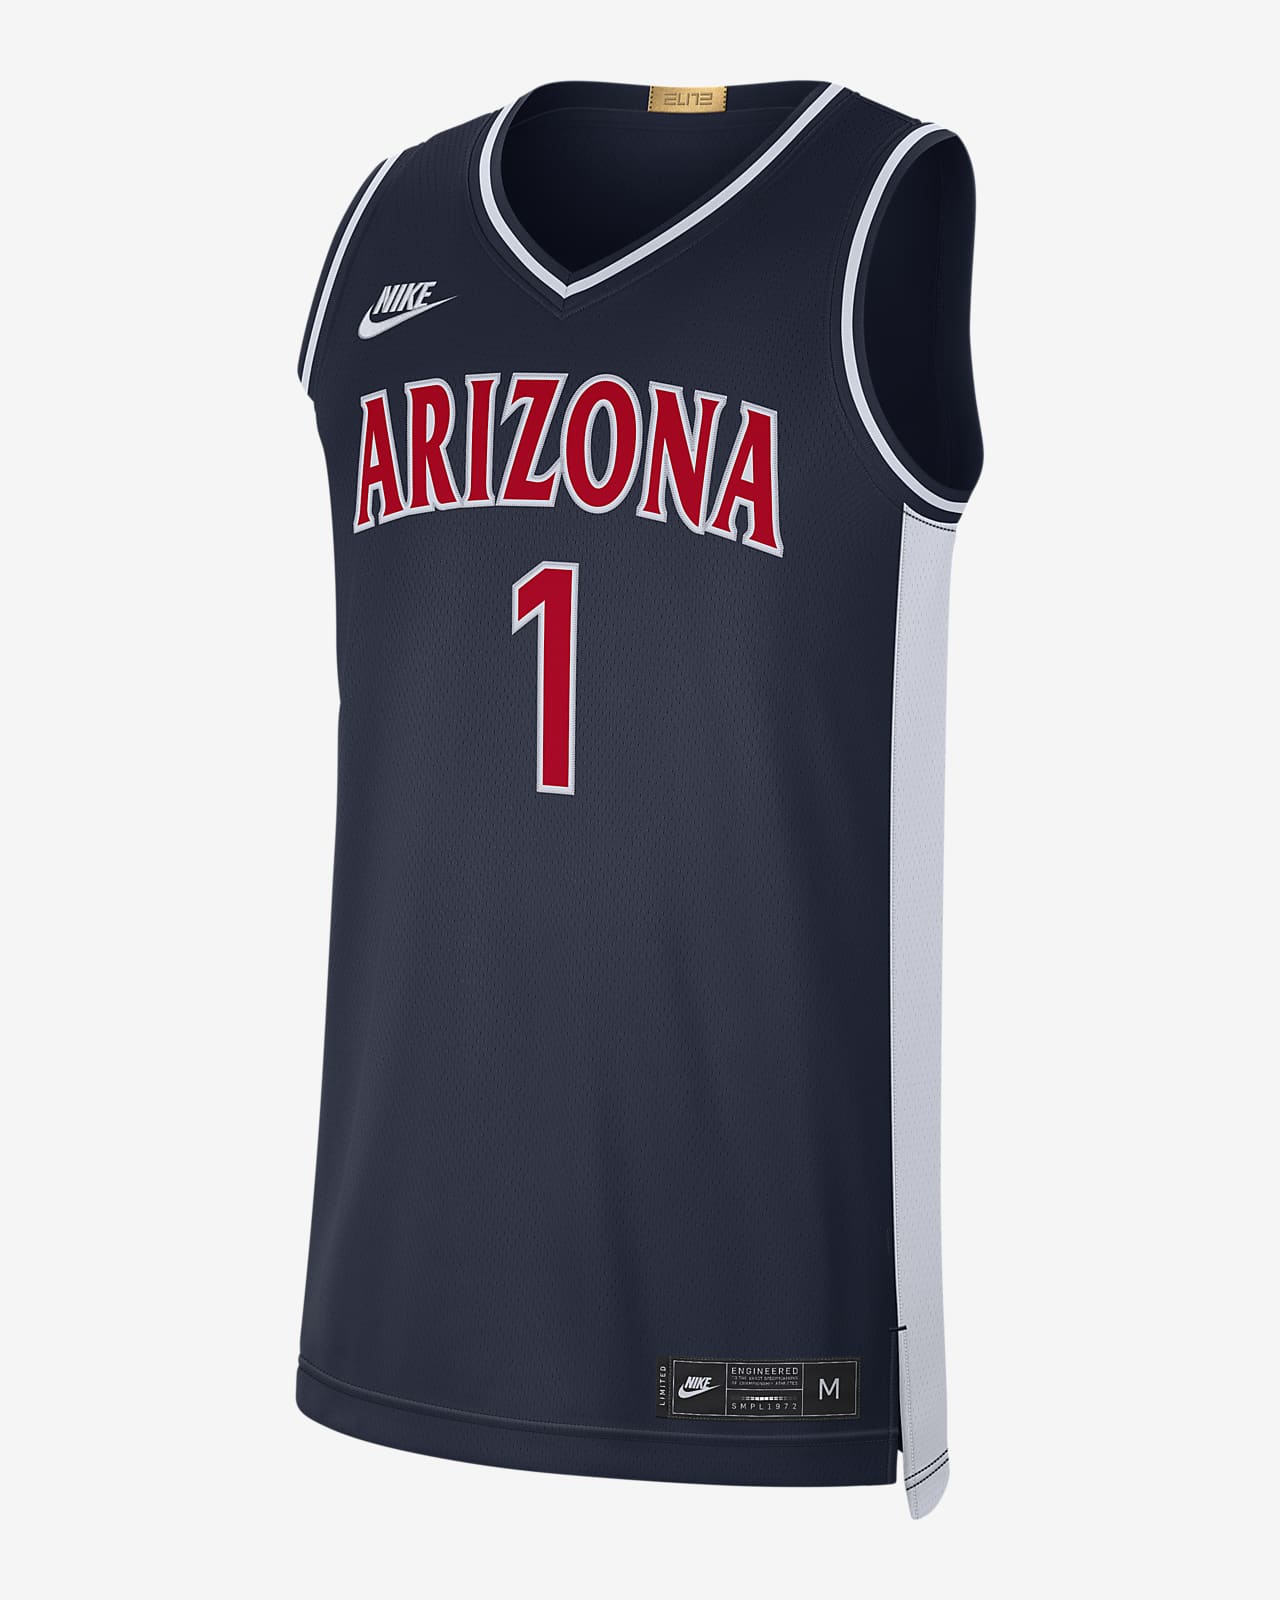 Jersey de básquetbol universitaria retro Nike Dri-FIT para hombre Arizona Limited